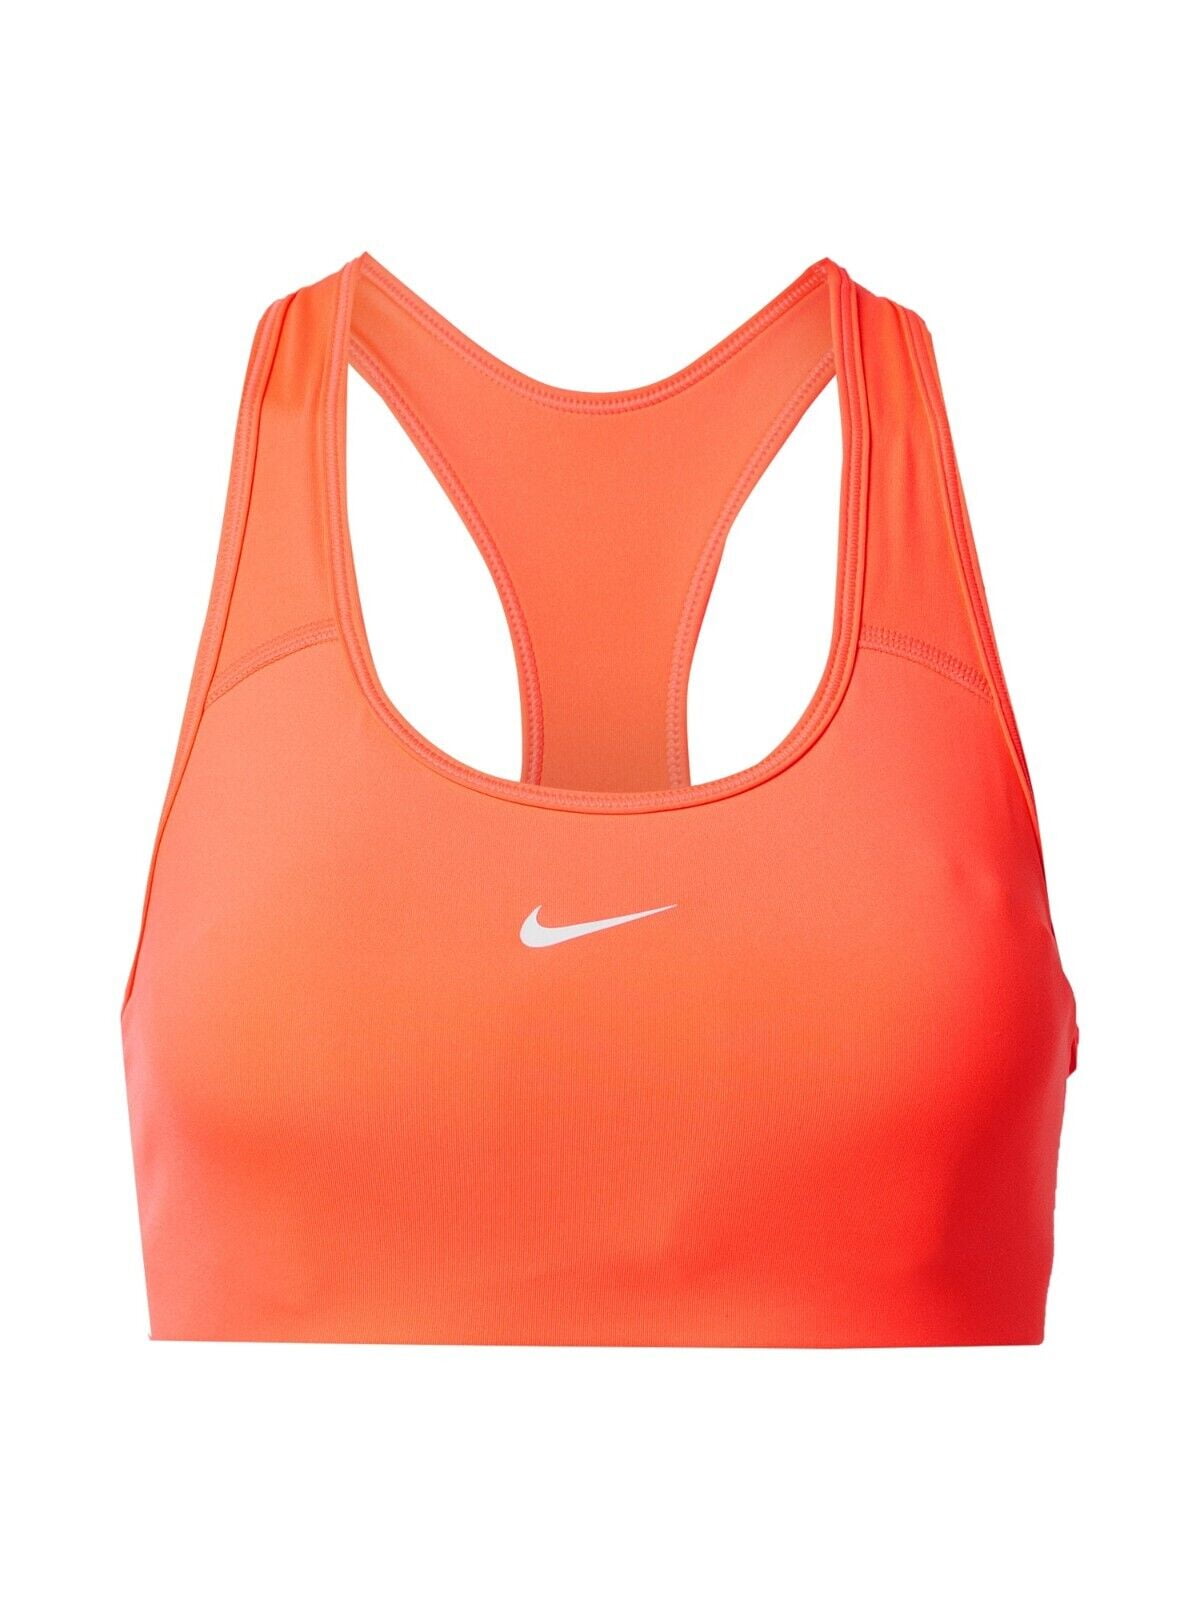 Nike Pro Rival Sports Bra Size 32C Bright Orange Padded - $19 - From  gracieumbrella